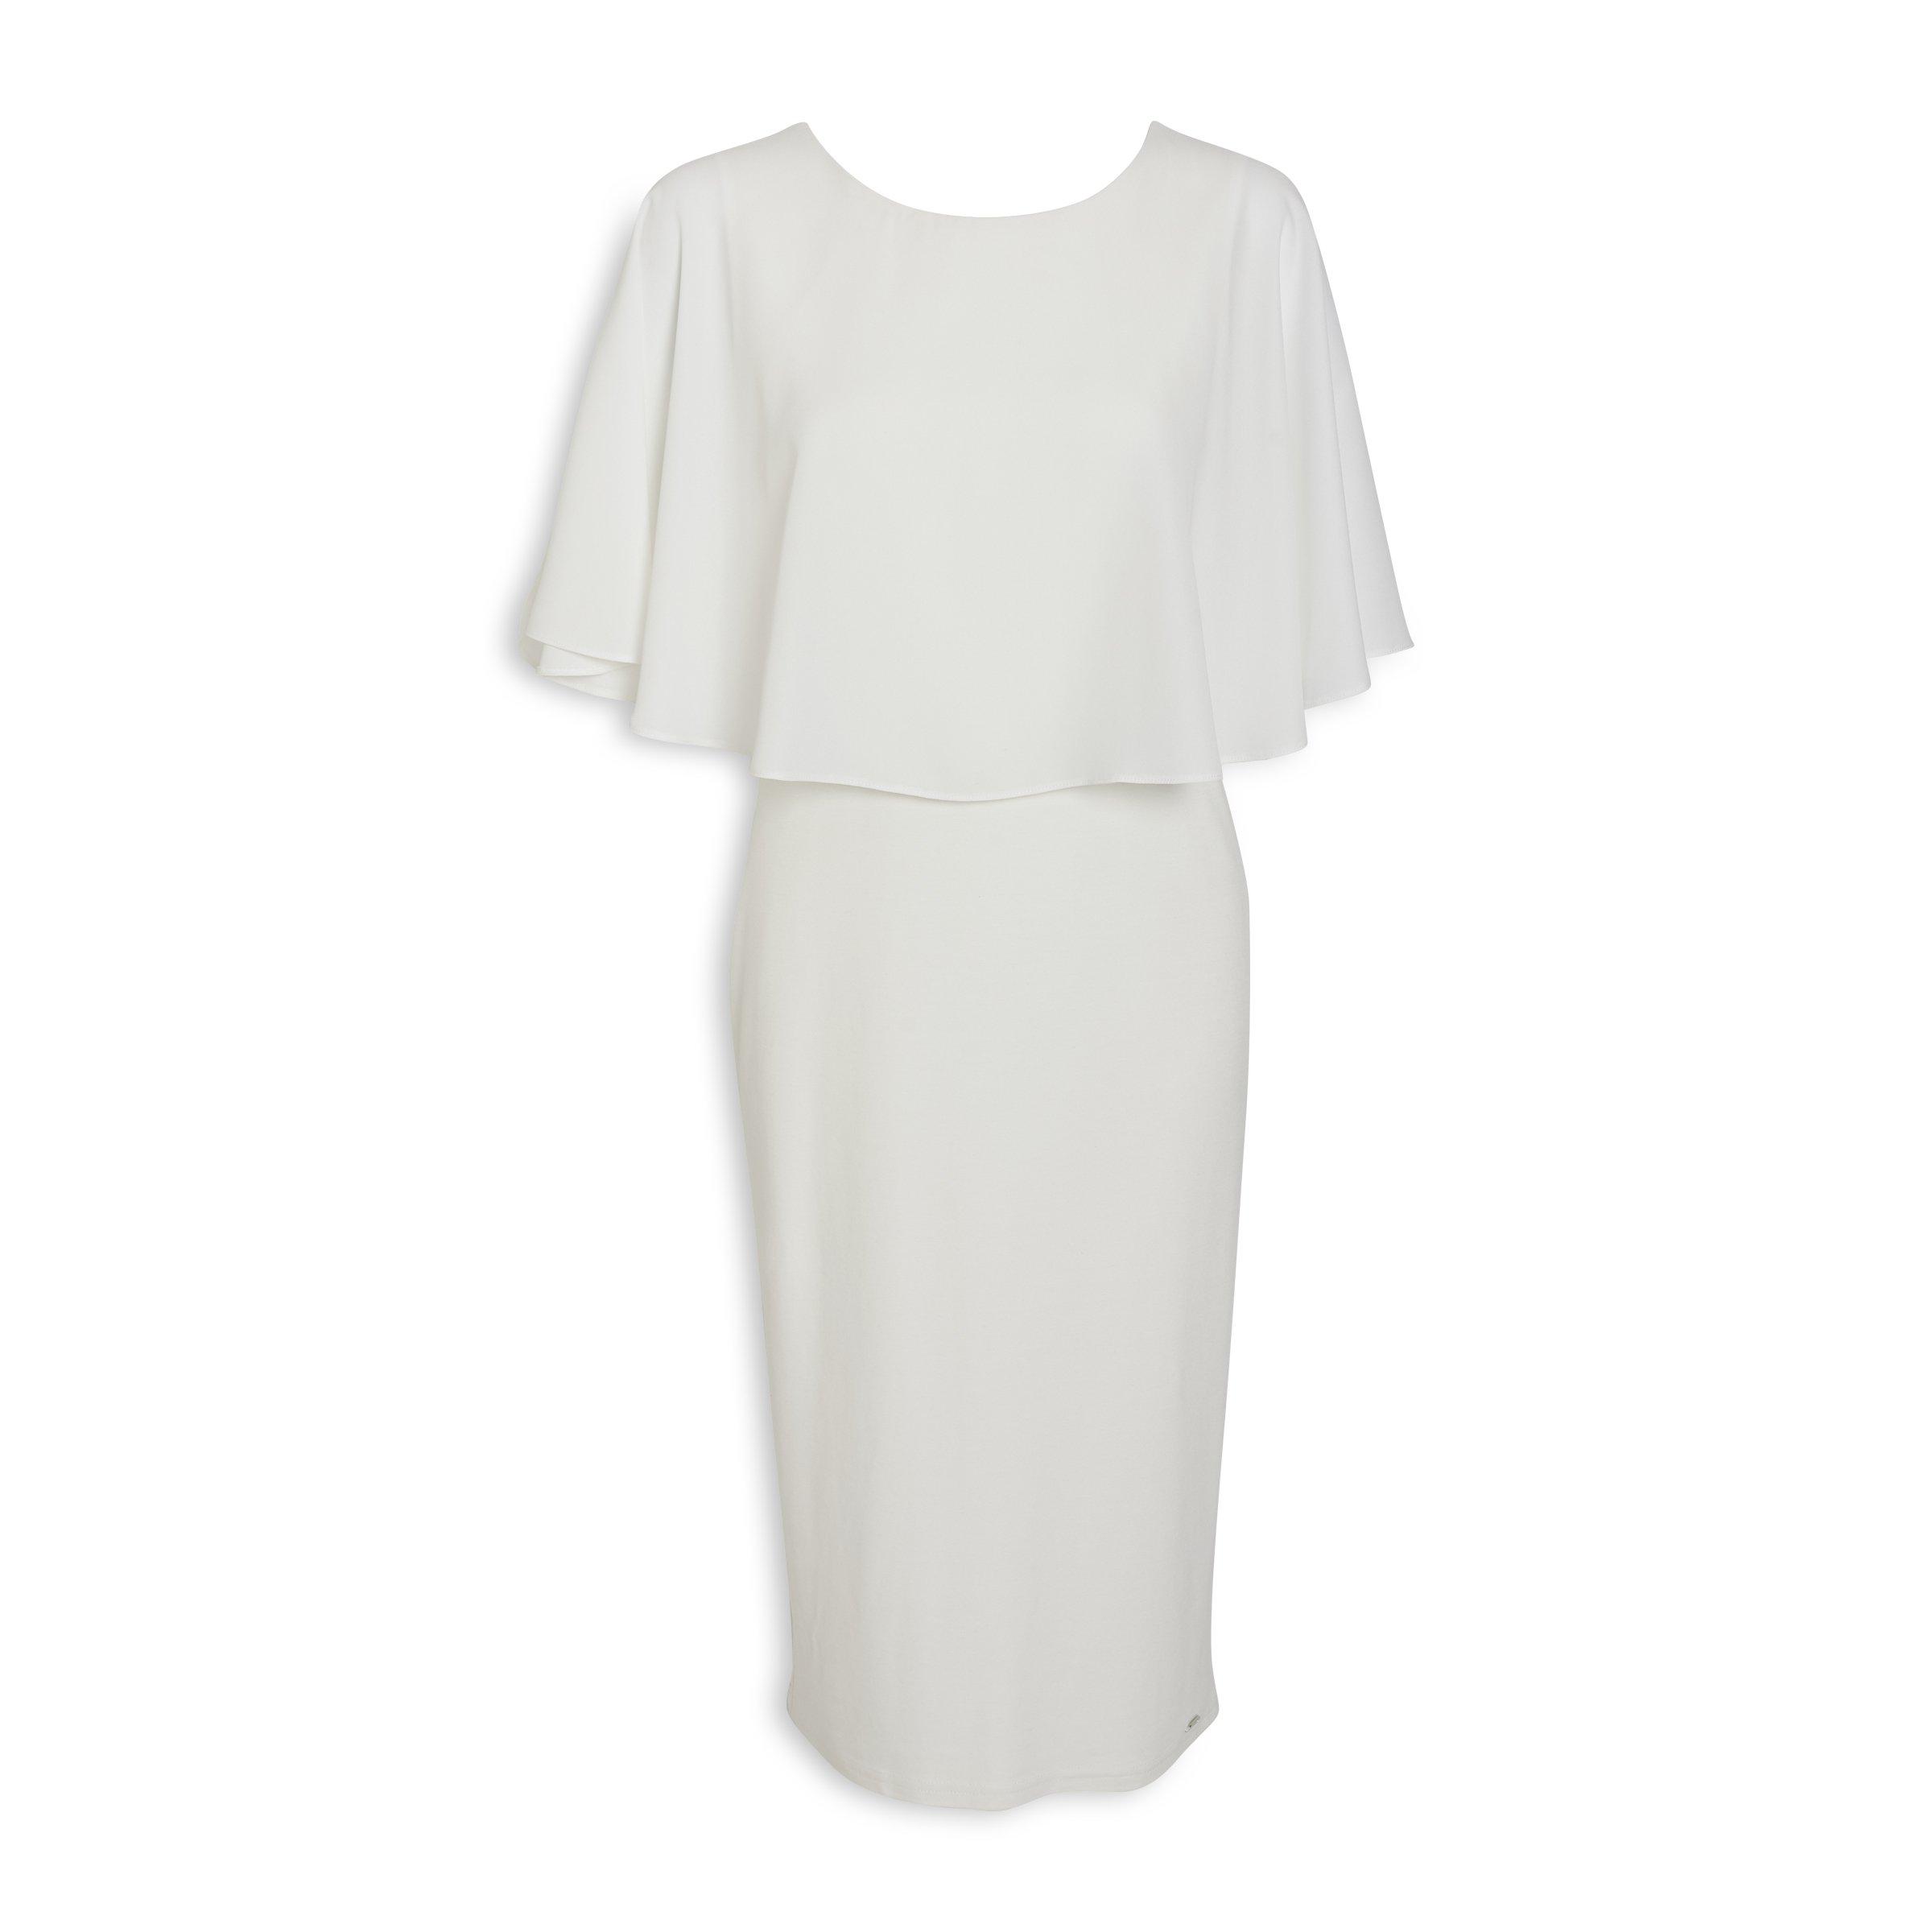 Truworths White Dresses 2021